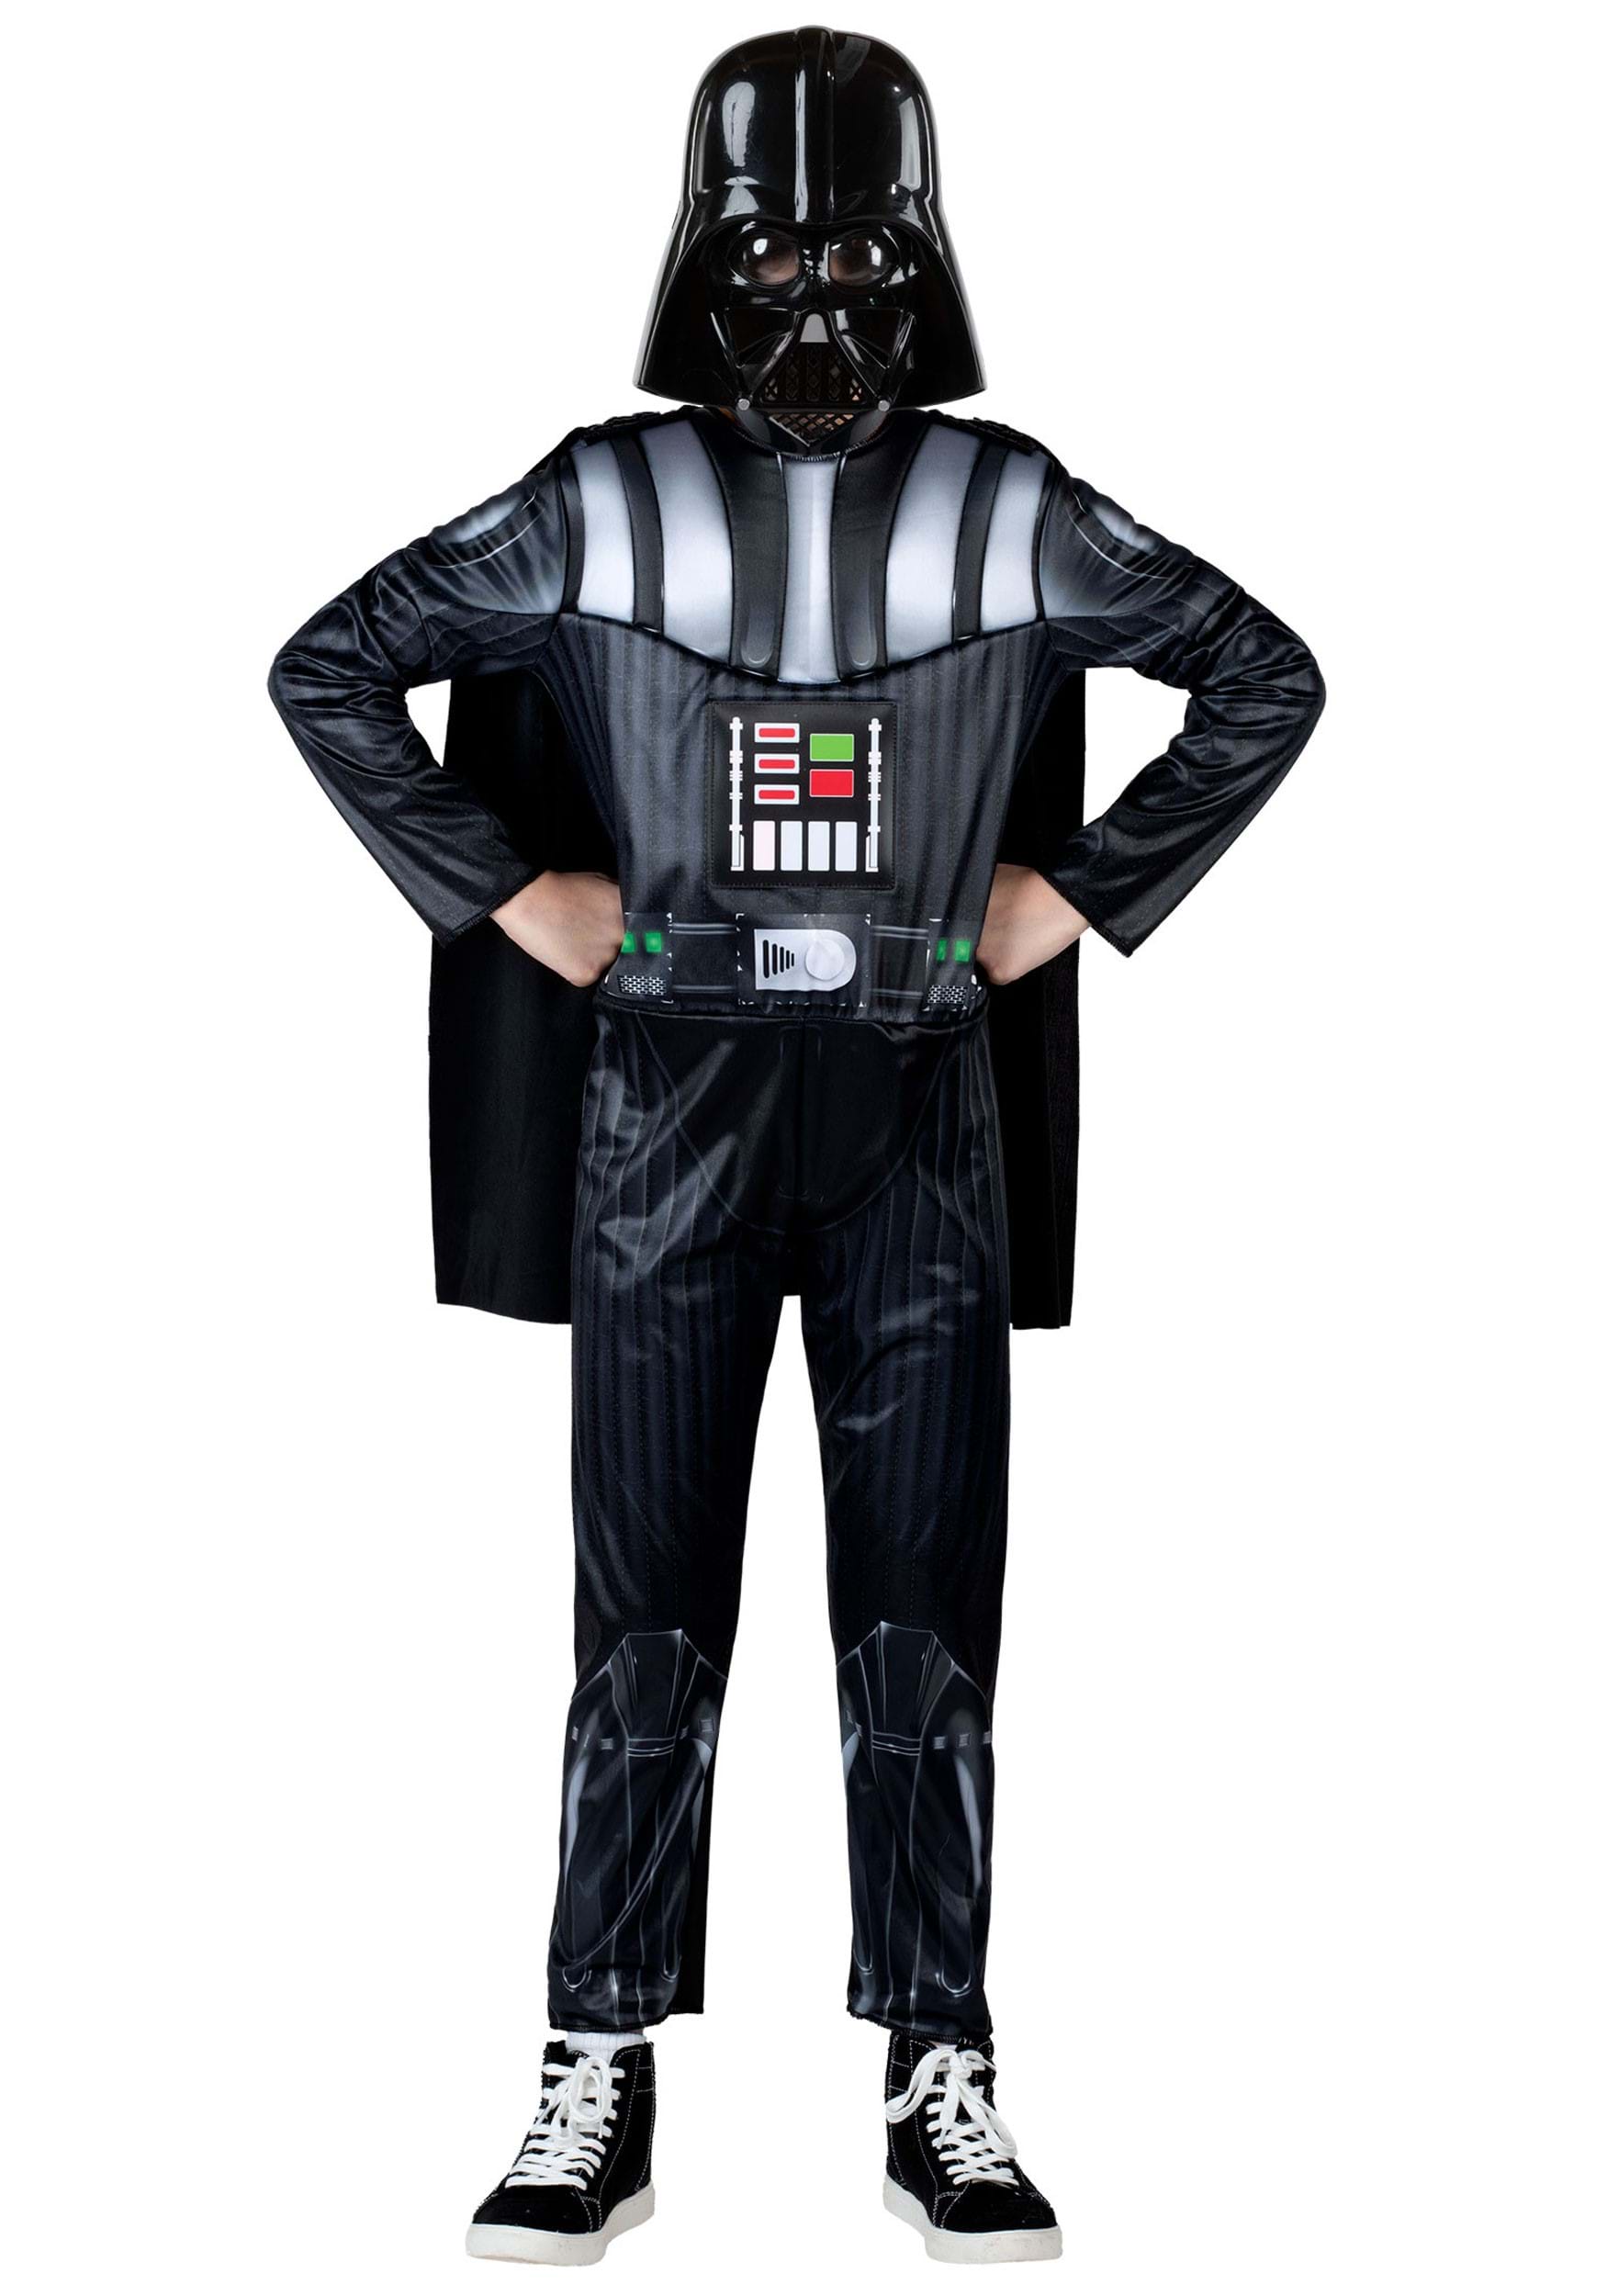 Kids Light Up Star Wars Darth Vader Costume